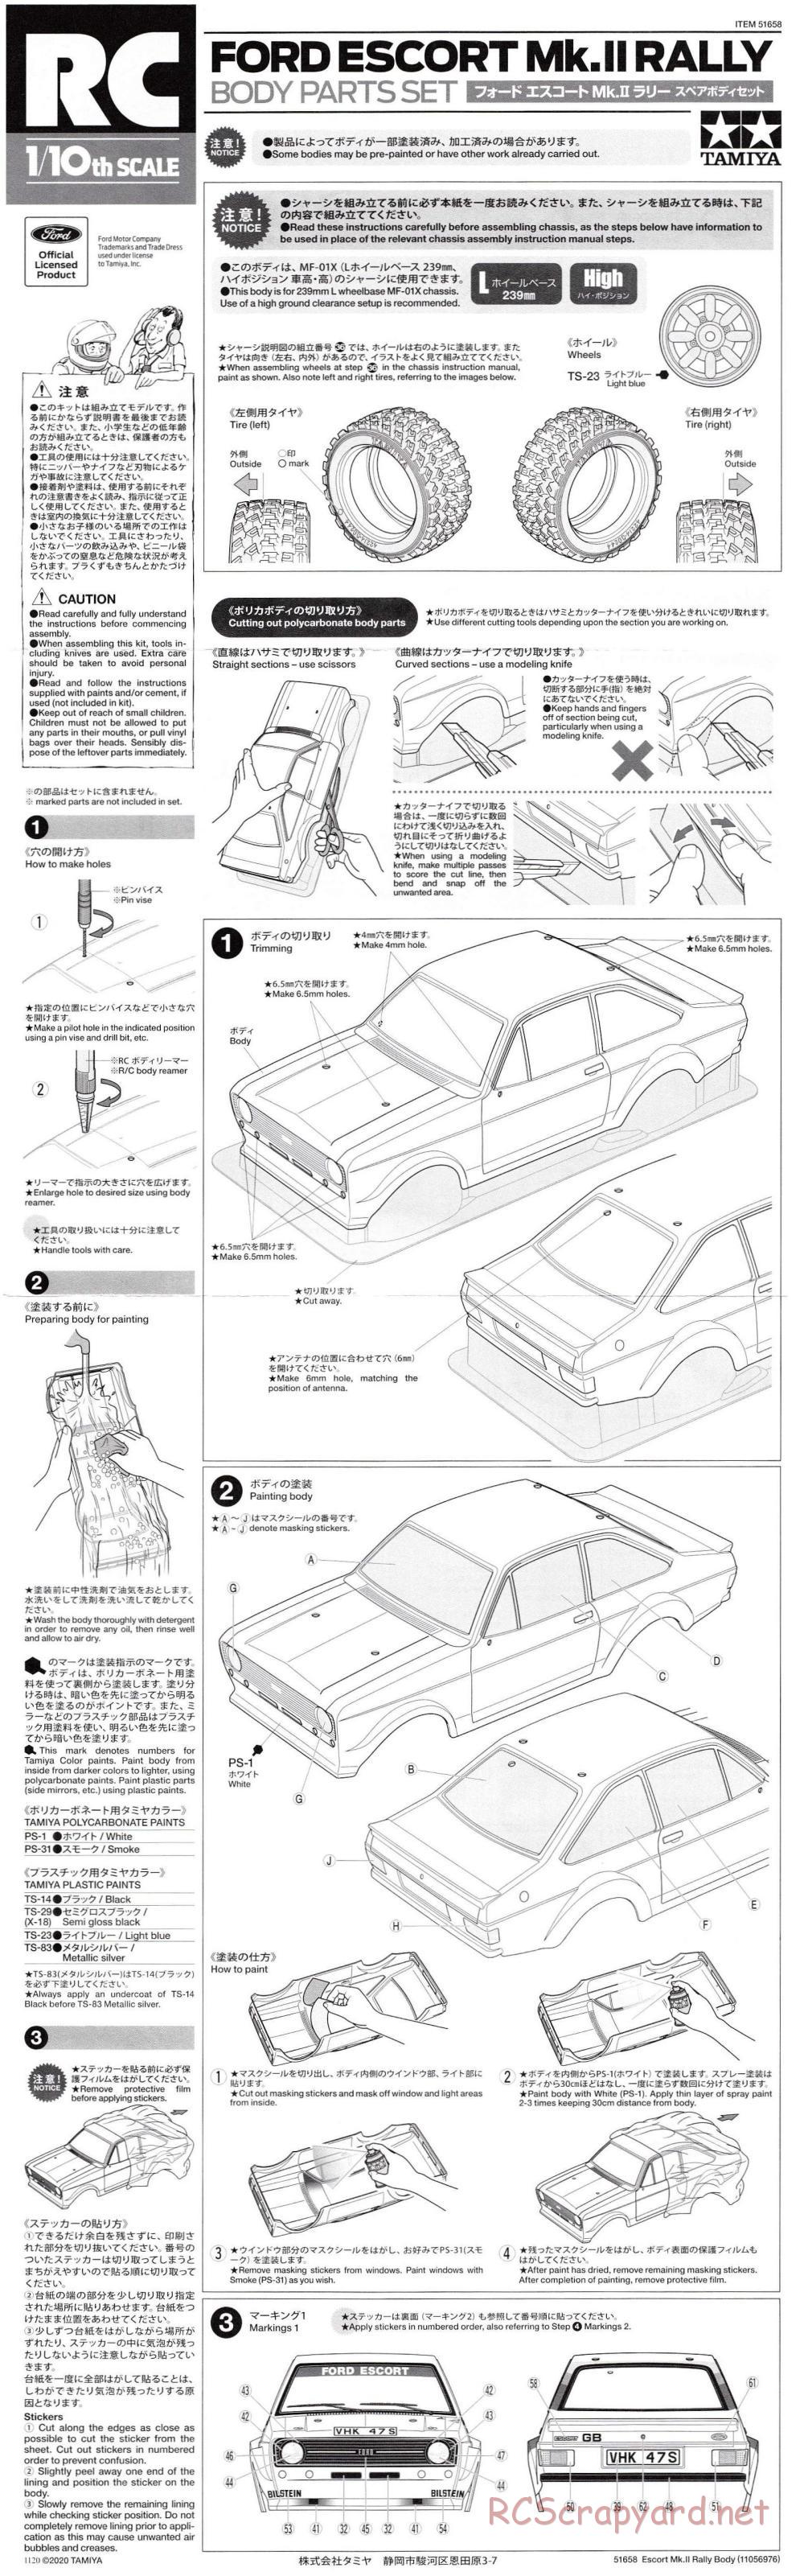 Tamiya - Ford Escort Mk.II Rally - MF-01X Chassis - Body Manual - Page 1